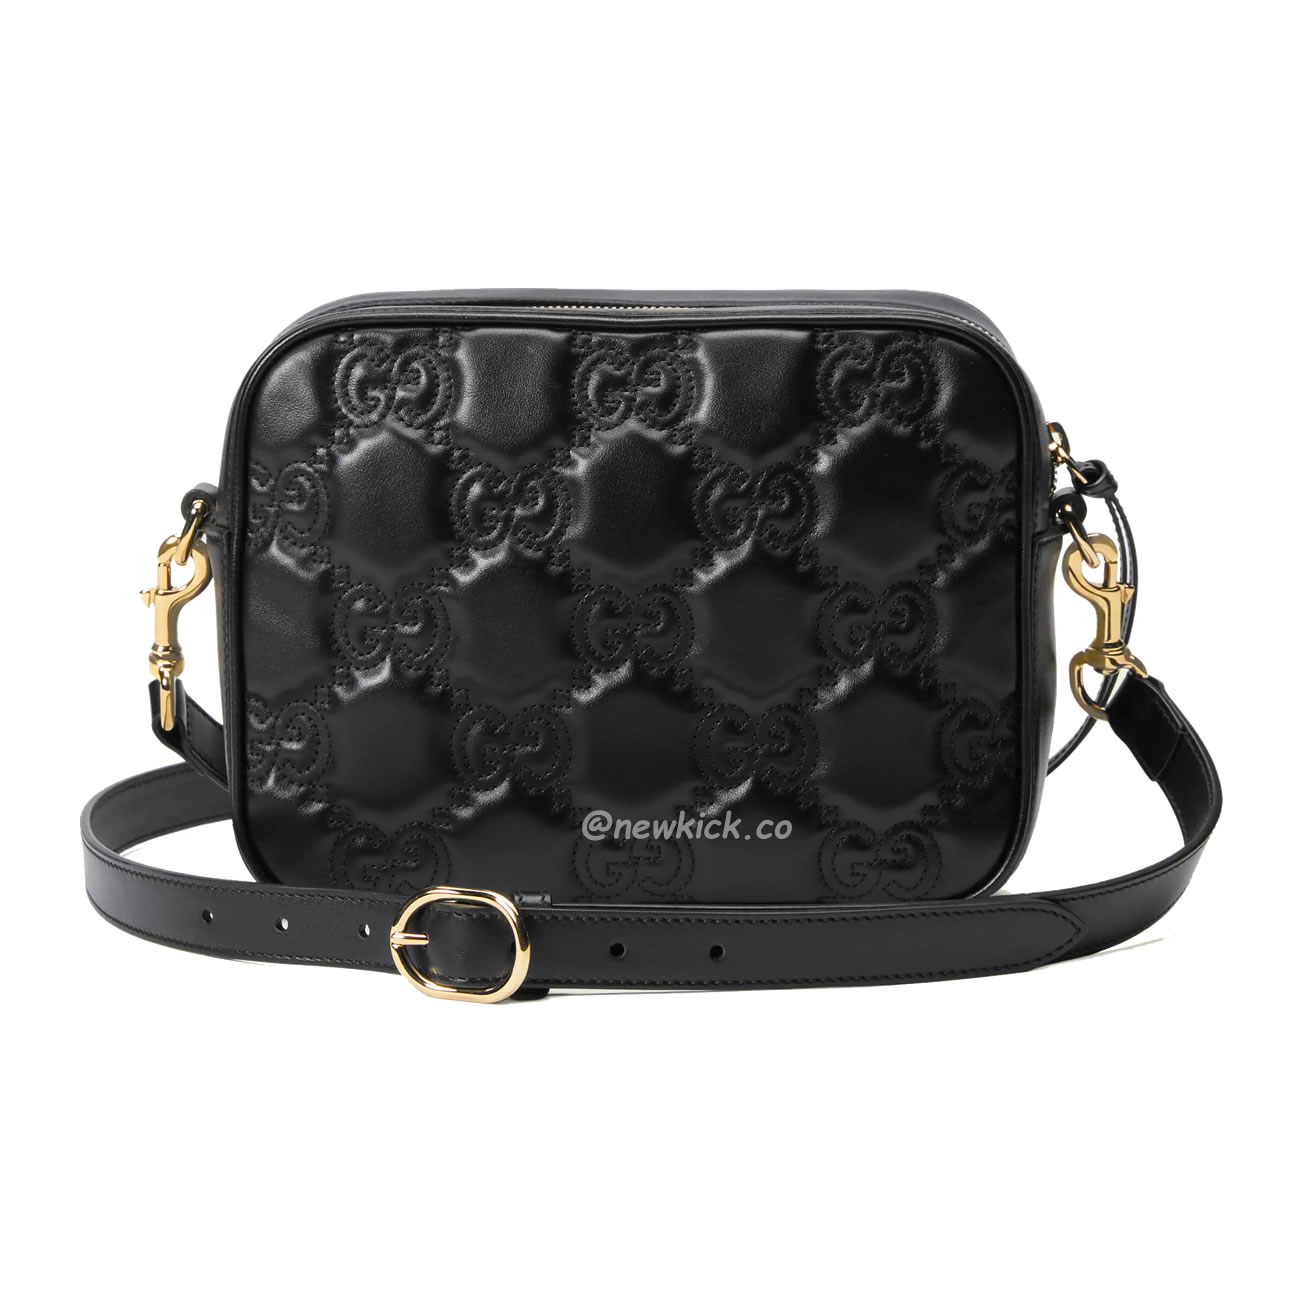 Gucci Gg Matelass Small Bag Product Details 702234 Um8hg 1046 (4) - newkick.org